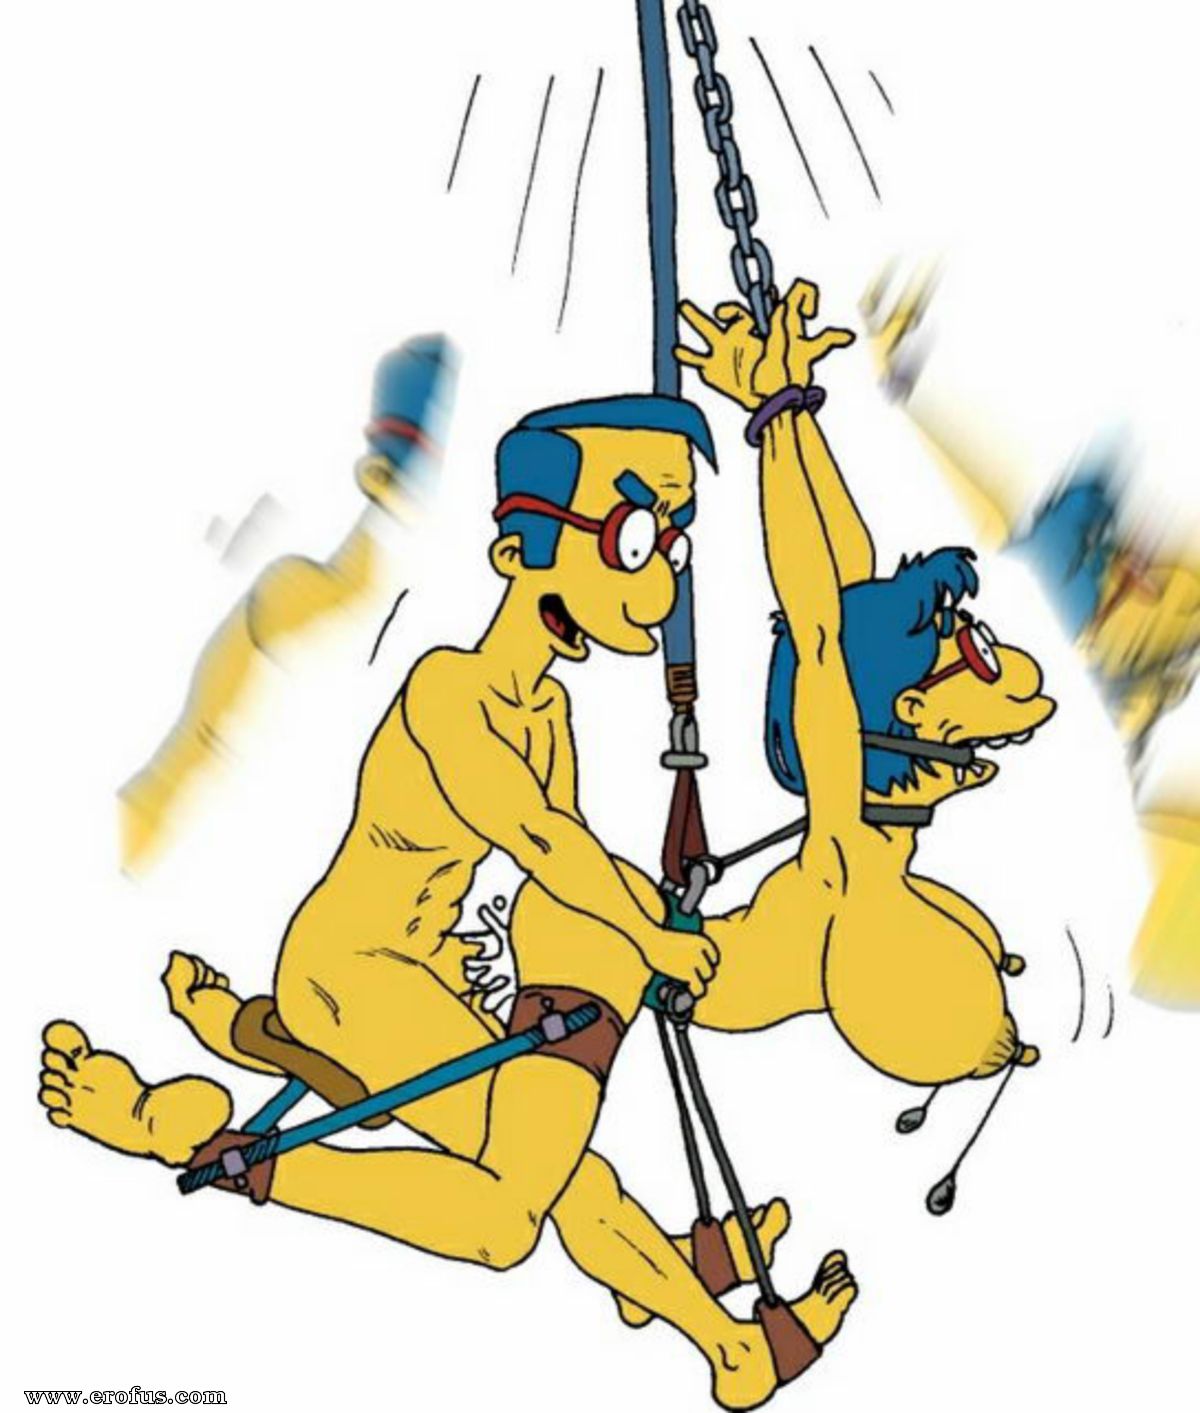 Marge simpson tortured in bondage